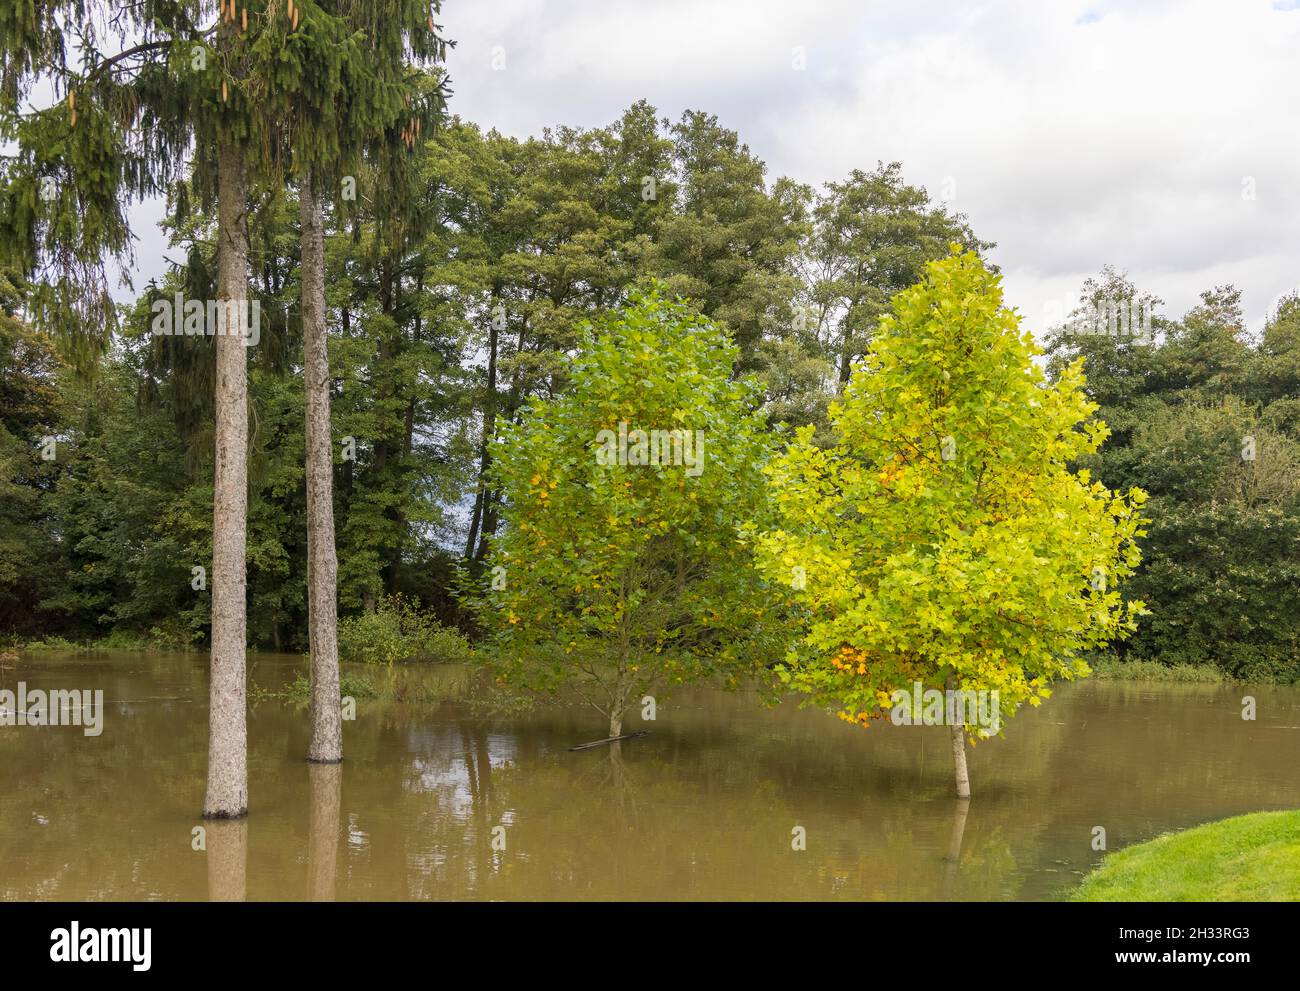 Liquidmbar (Liquidambar styraciflua) et d'autres arbres se trouvant dans la Mole inondée de la rivière à Painshill Park, Cobham, Surrey, sud-est de l'Angleterre en automne Banque D'Images